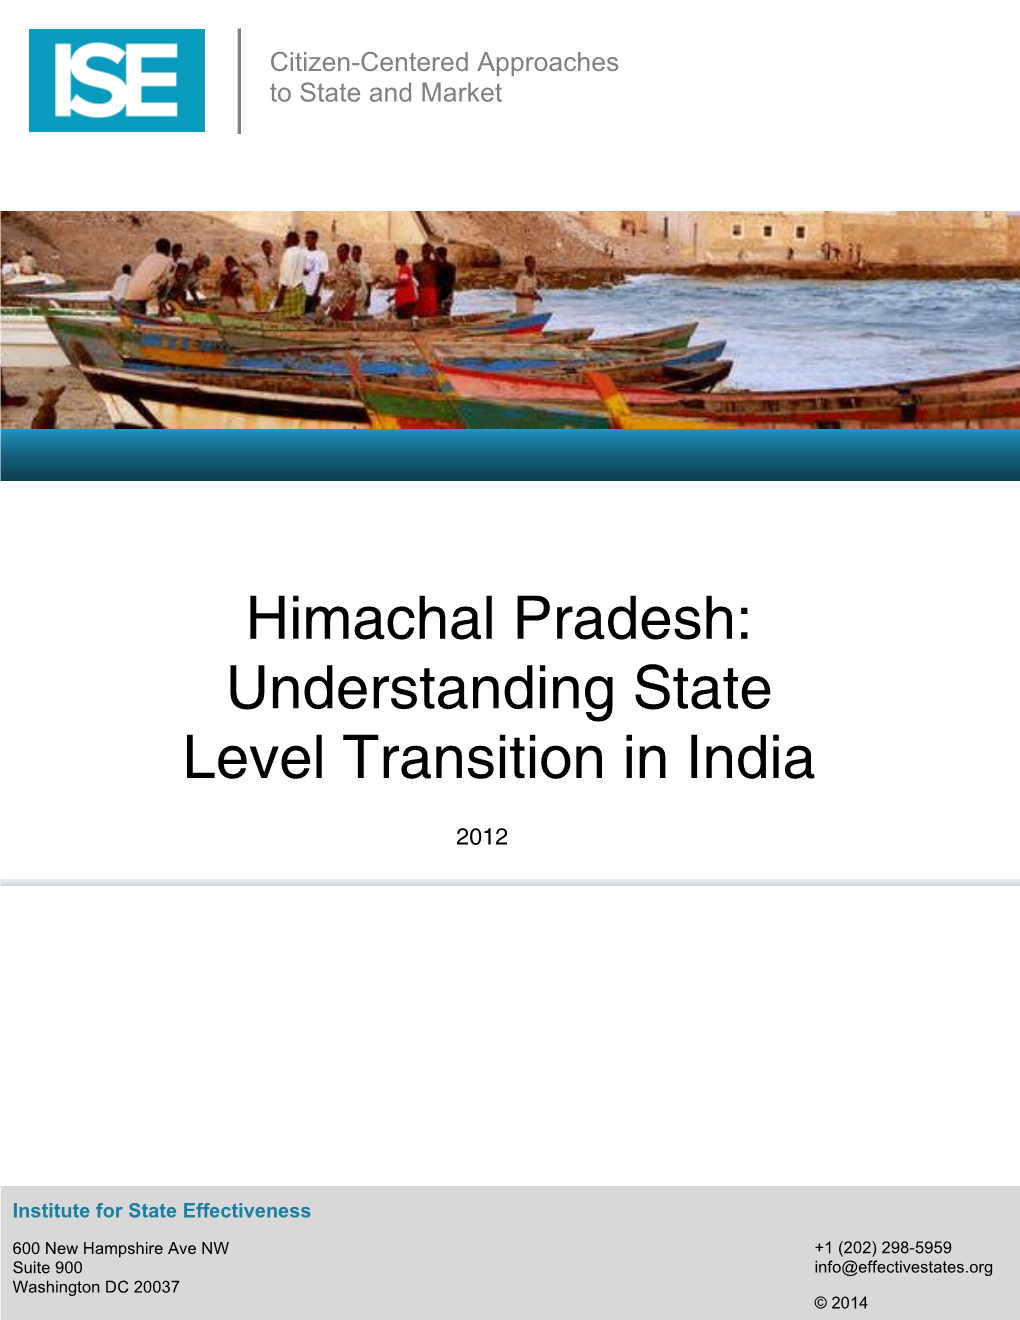 Himachal Pradesh: Understanding State Level Transition in India